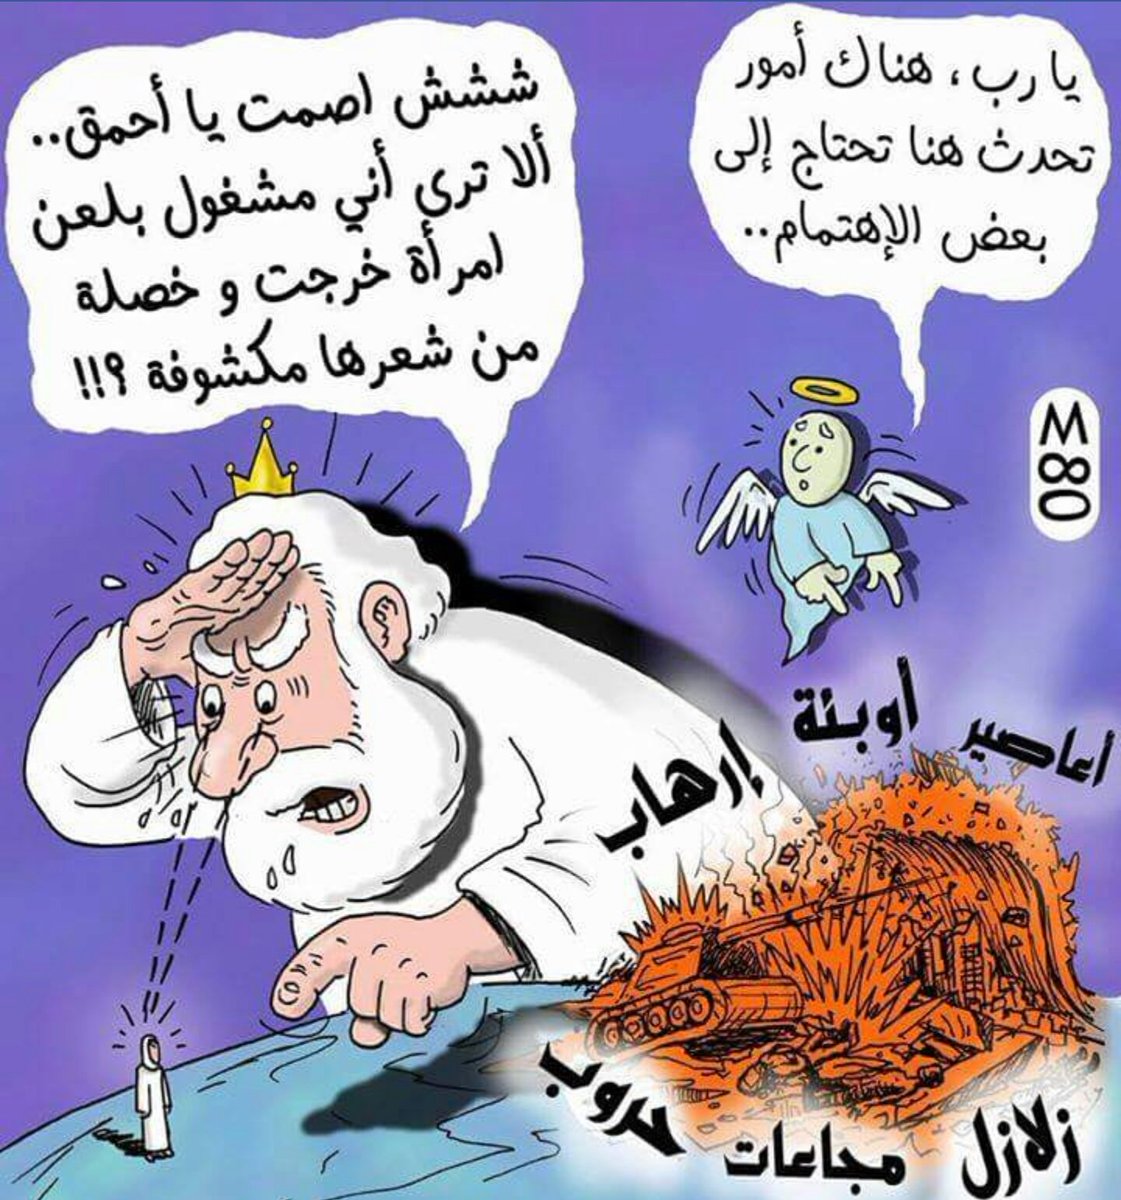 Meshal on Twitter: "ما يقوم به رسام الكاريكاتير موسى والمعروف ب (M80) يعادل مئات الكتب والمقالات التي كتبت وستكتب في نقد الأديان. https://t.co/KWD3dhX9vK" / Twitter